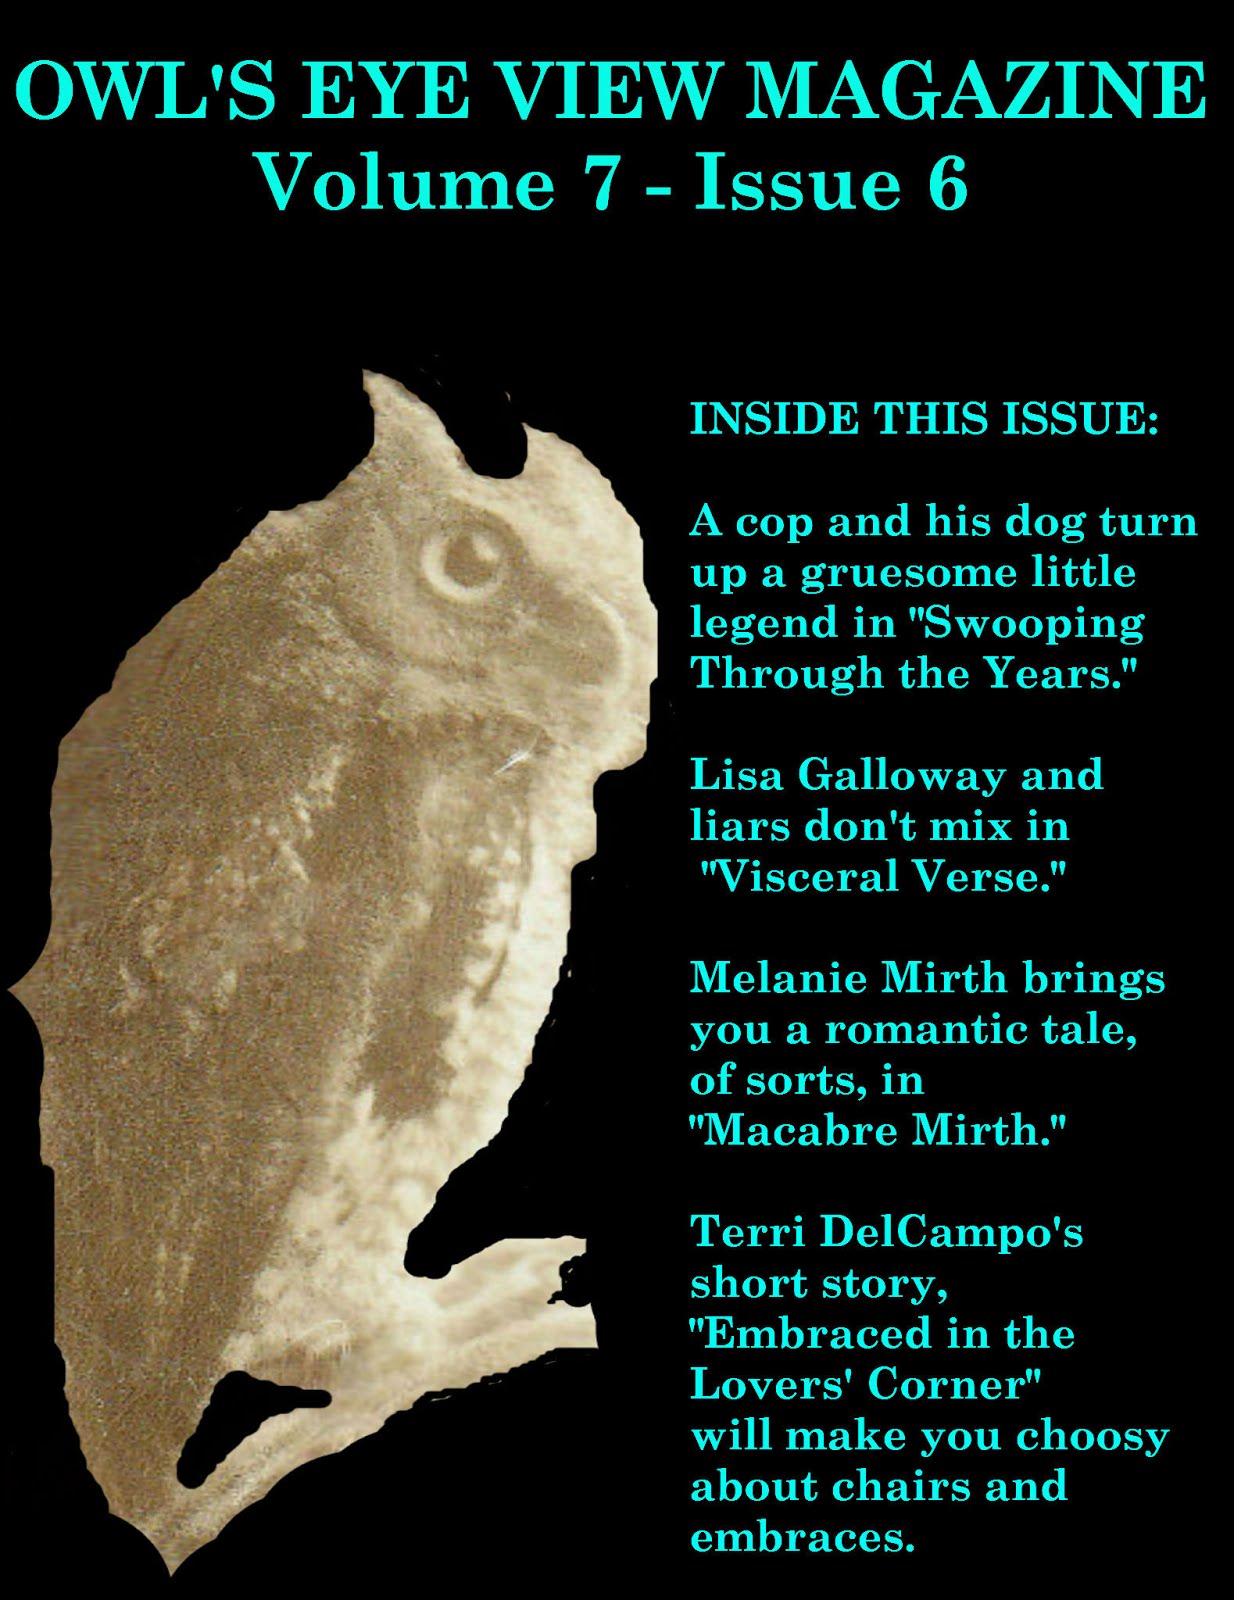 OWL'S EYE VIEW MAGAZINE ISSUE 6